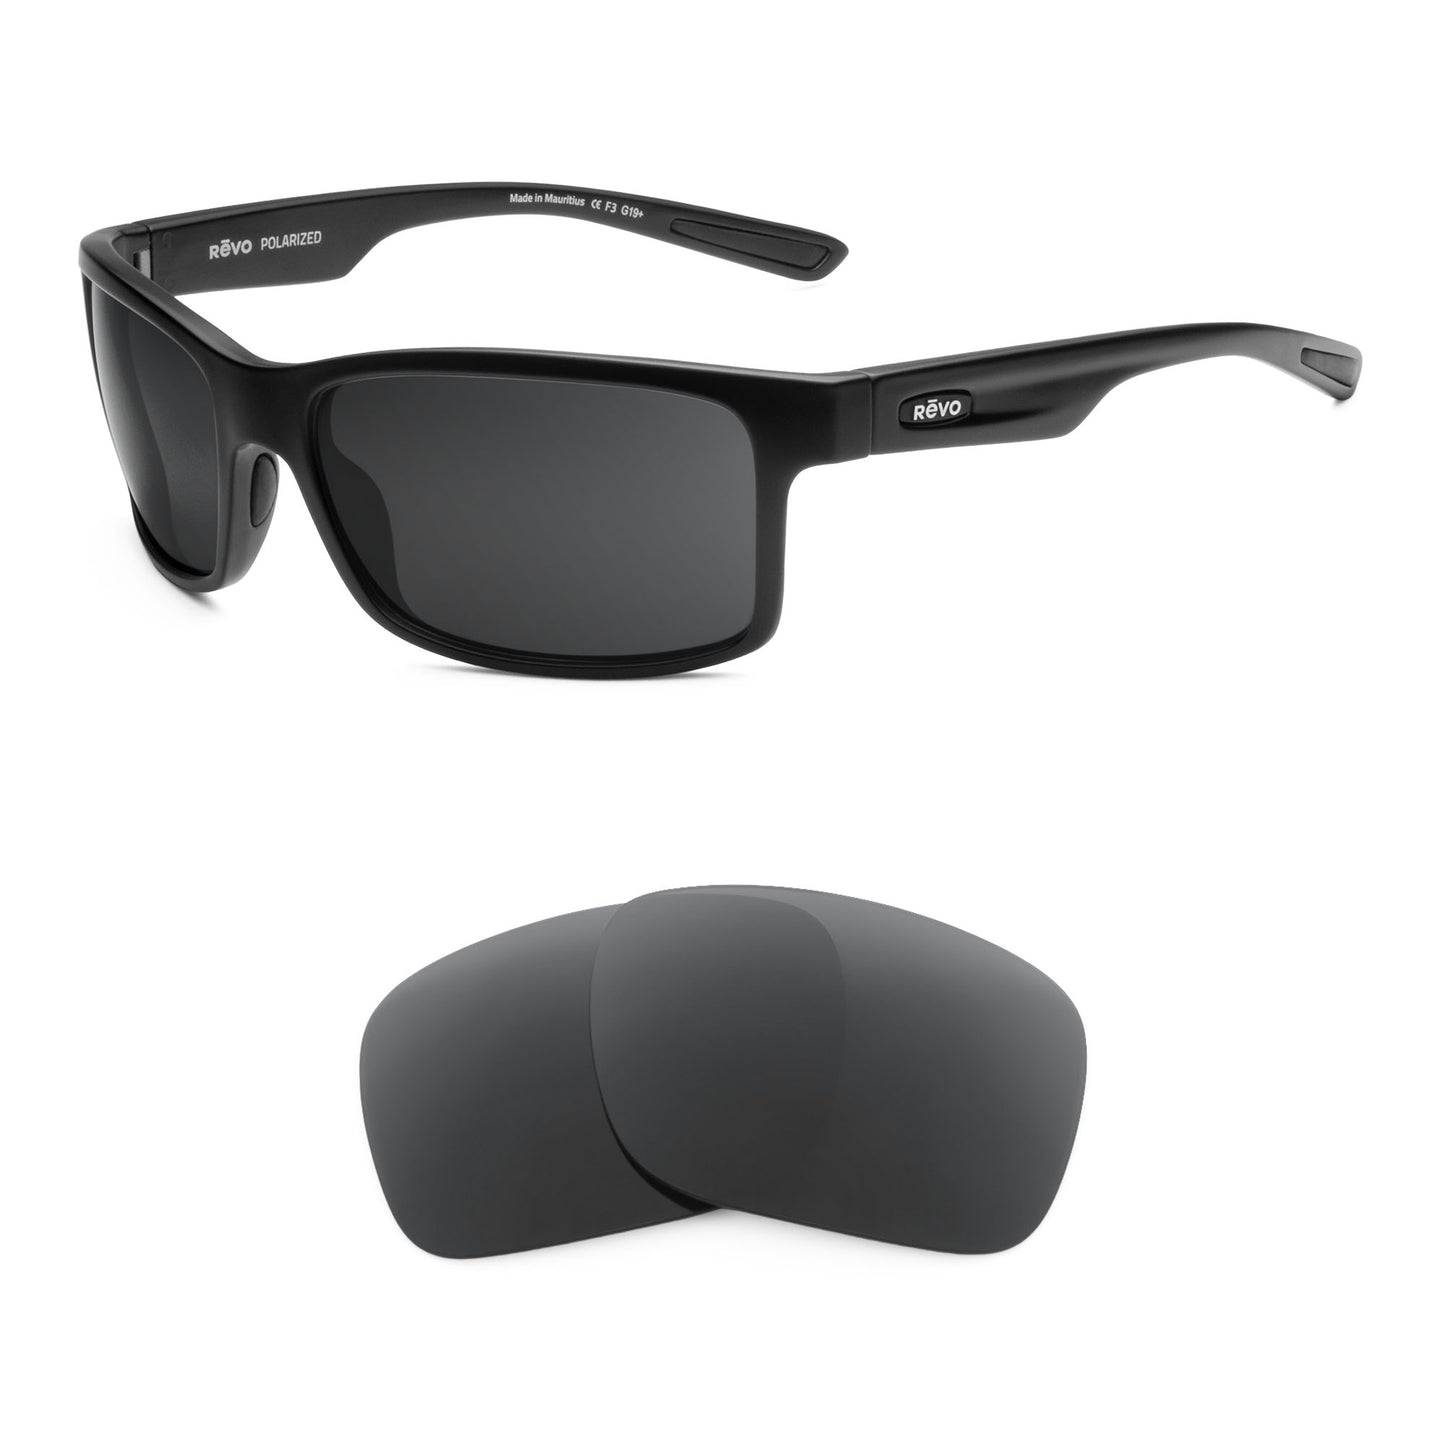 Revo Crawler sunglasses with replacement lenses